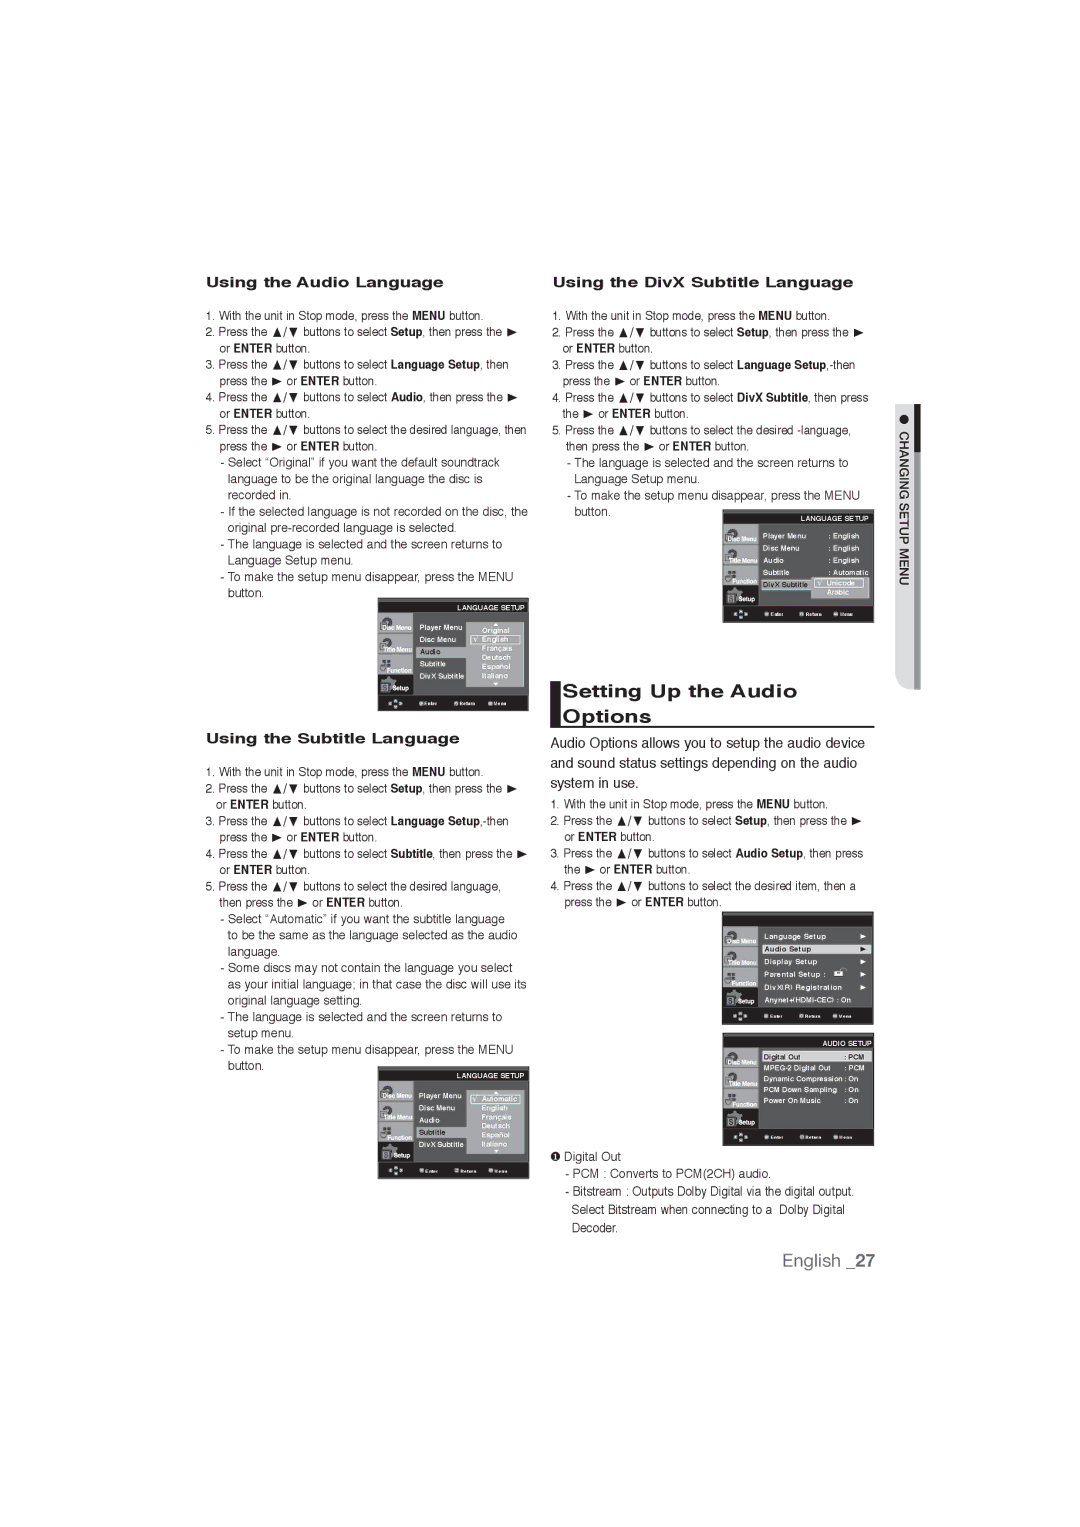 Samsung DVD-1080P9/SAM manual Setting Up the Audio Options, Using the Audio Language Using the DivX Subtitle Language 